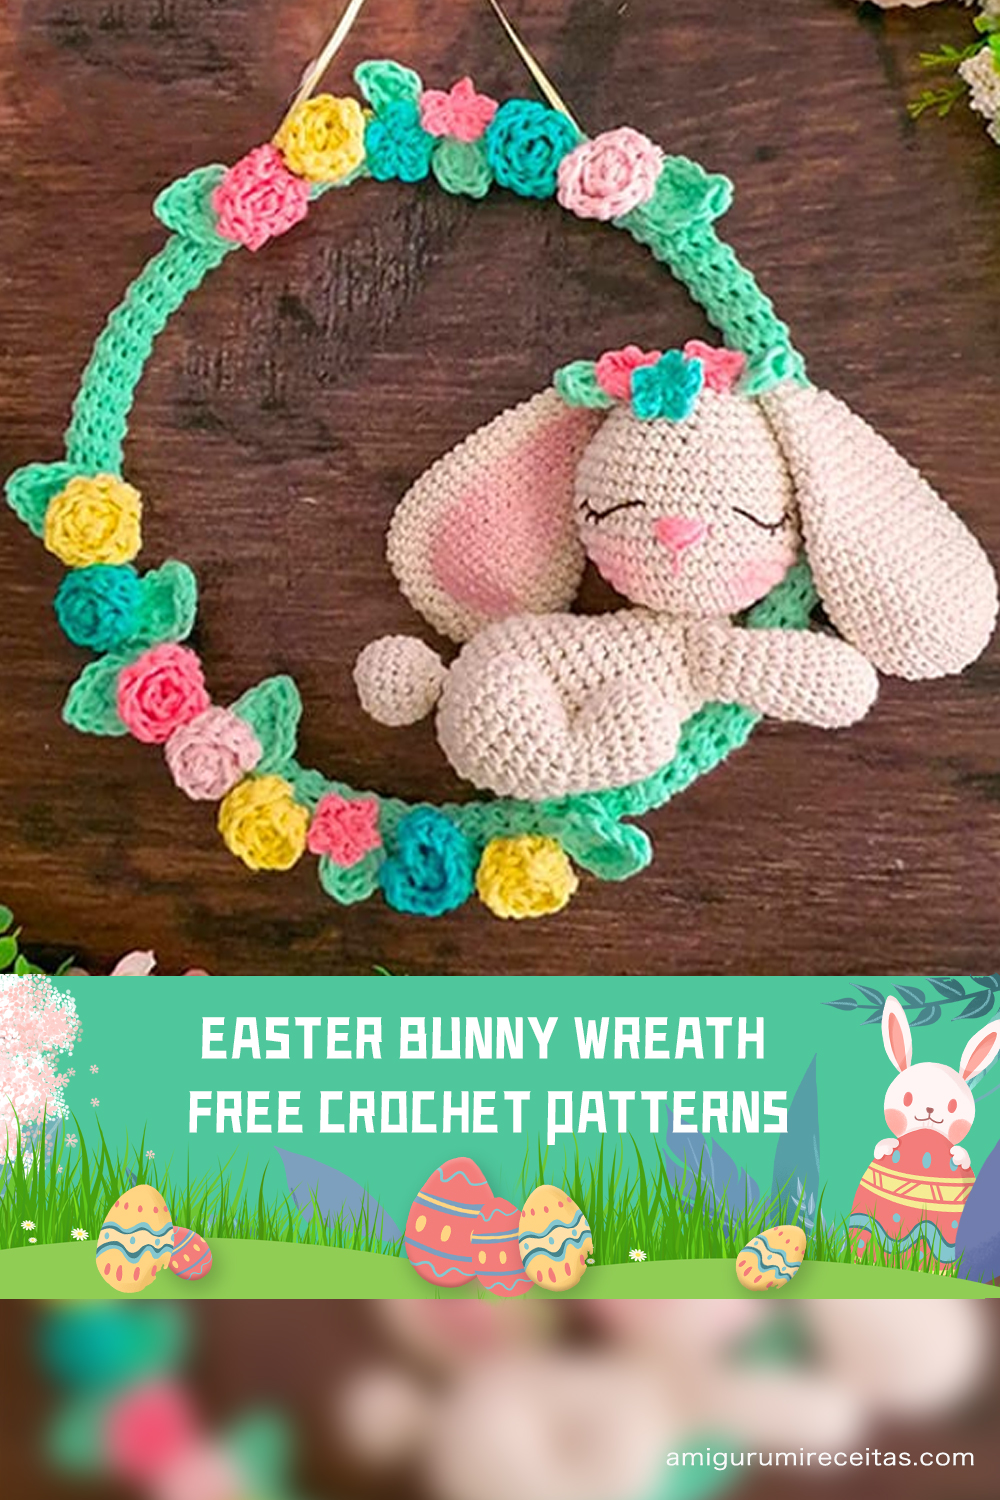 FREE Crochet Easter Bunny Wreath Patterns